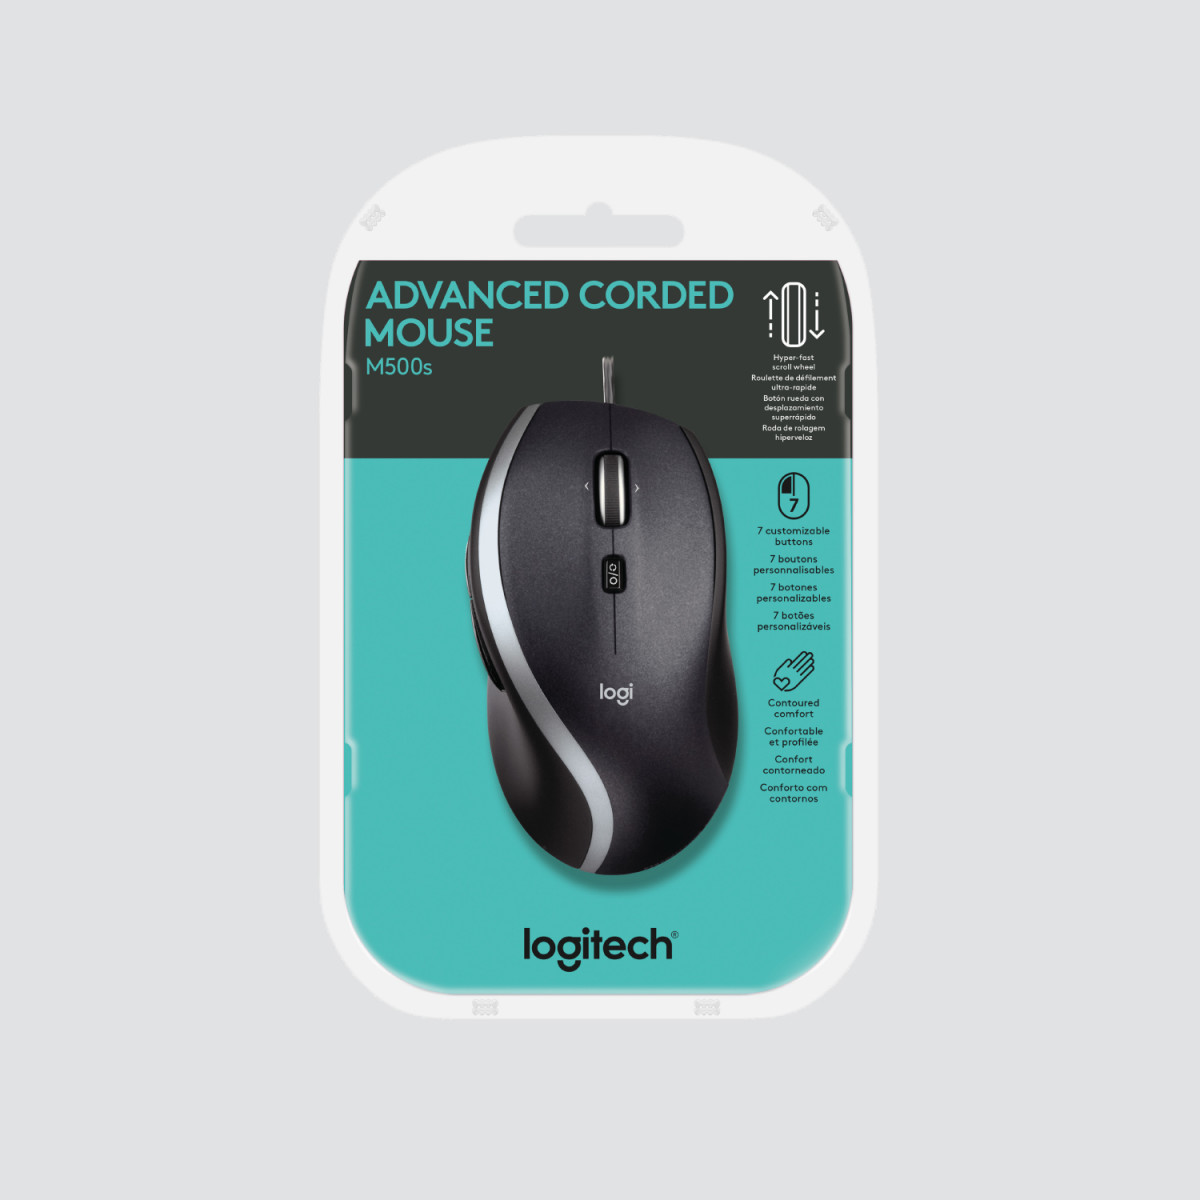 Advanced Corded Mouse M500s - Black